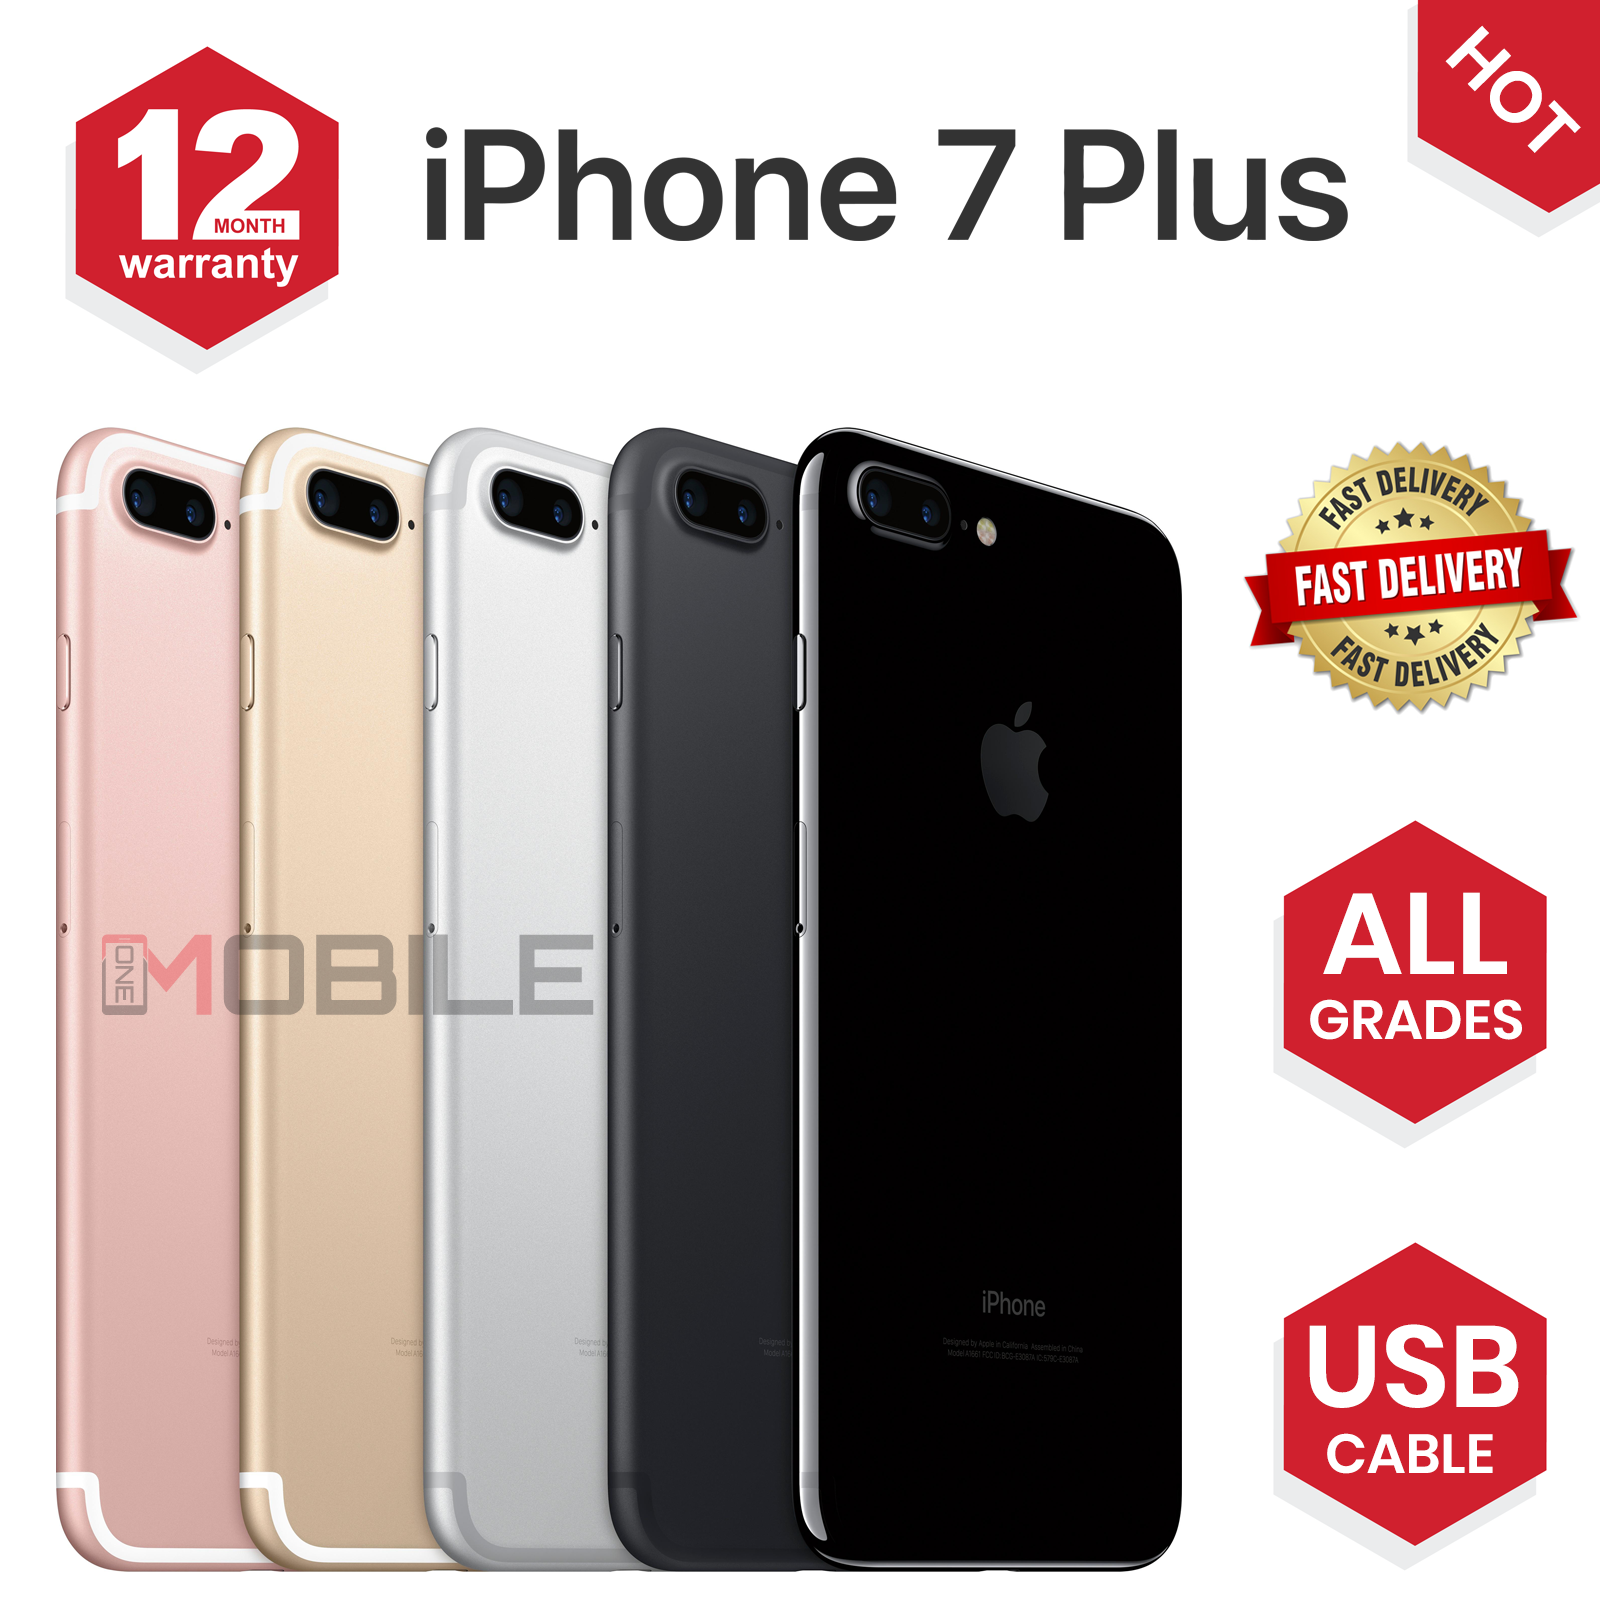 Apple iPhone 7 Plus - 32GB 128GB 256GB - Unlocked SIM Free Smartphone